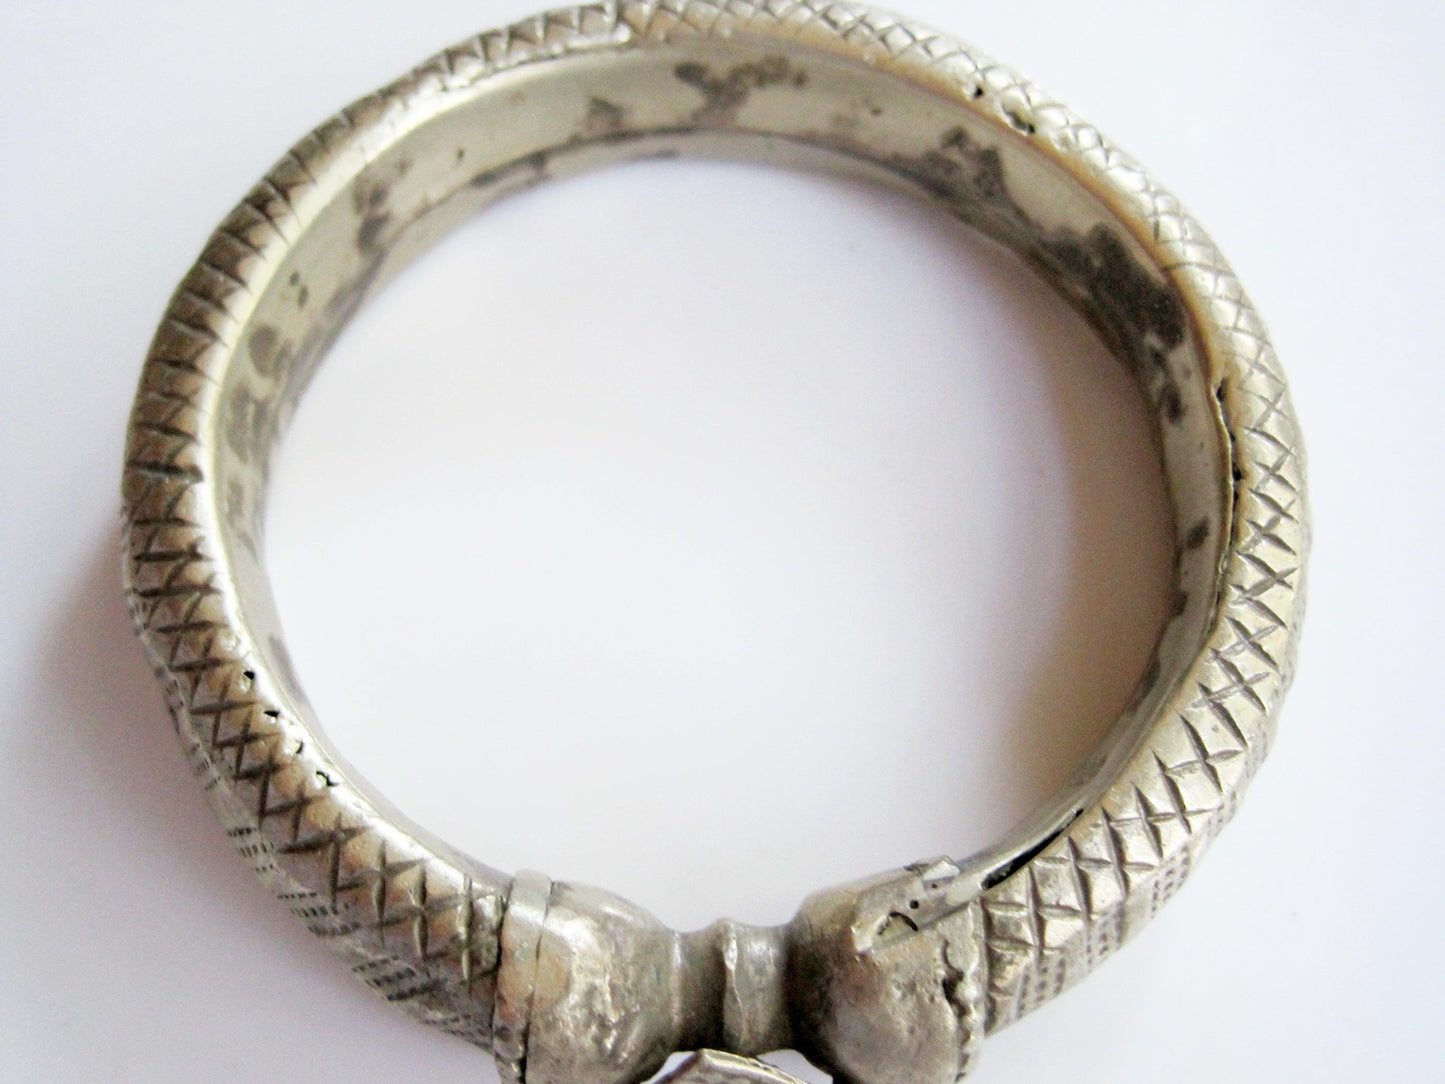 Vintage Metal Bedouin Bracelet or Bangle from Yemen - Anteeka